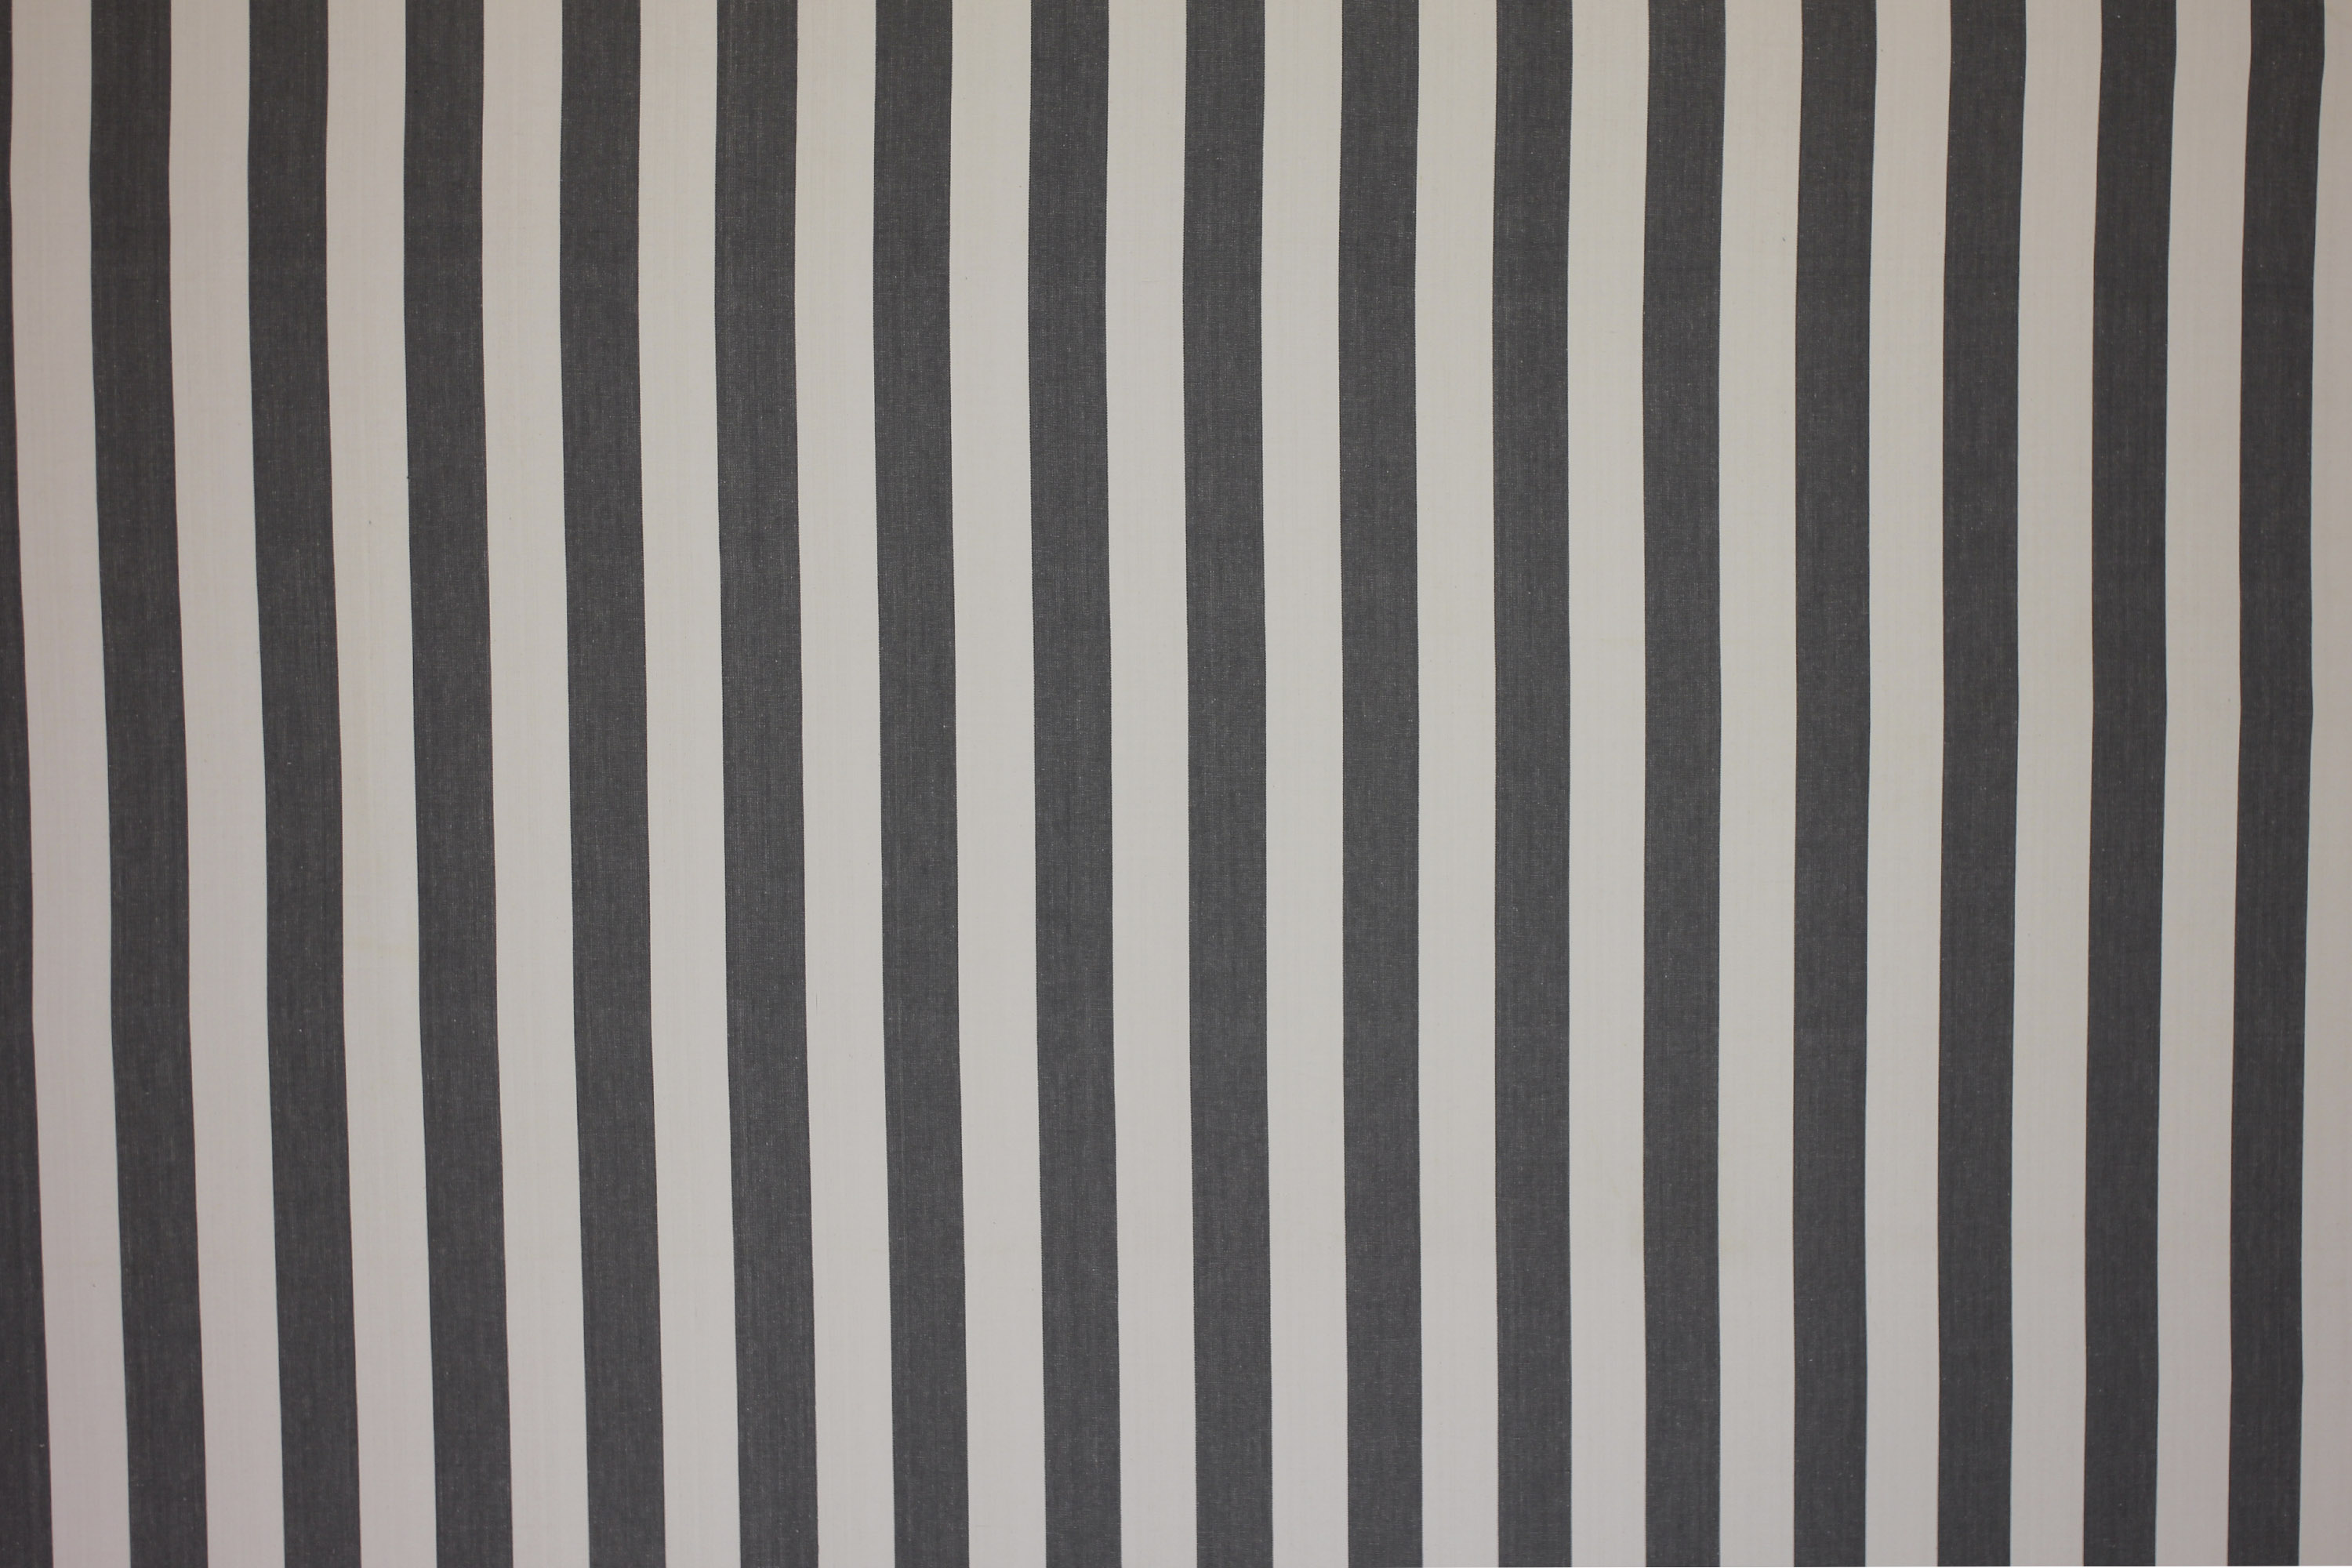 Grey Striped Fabrics - Grey and white striped fabric